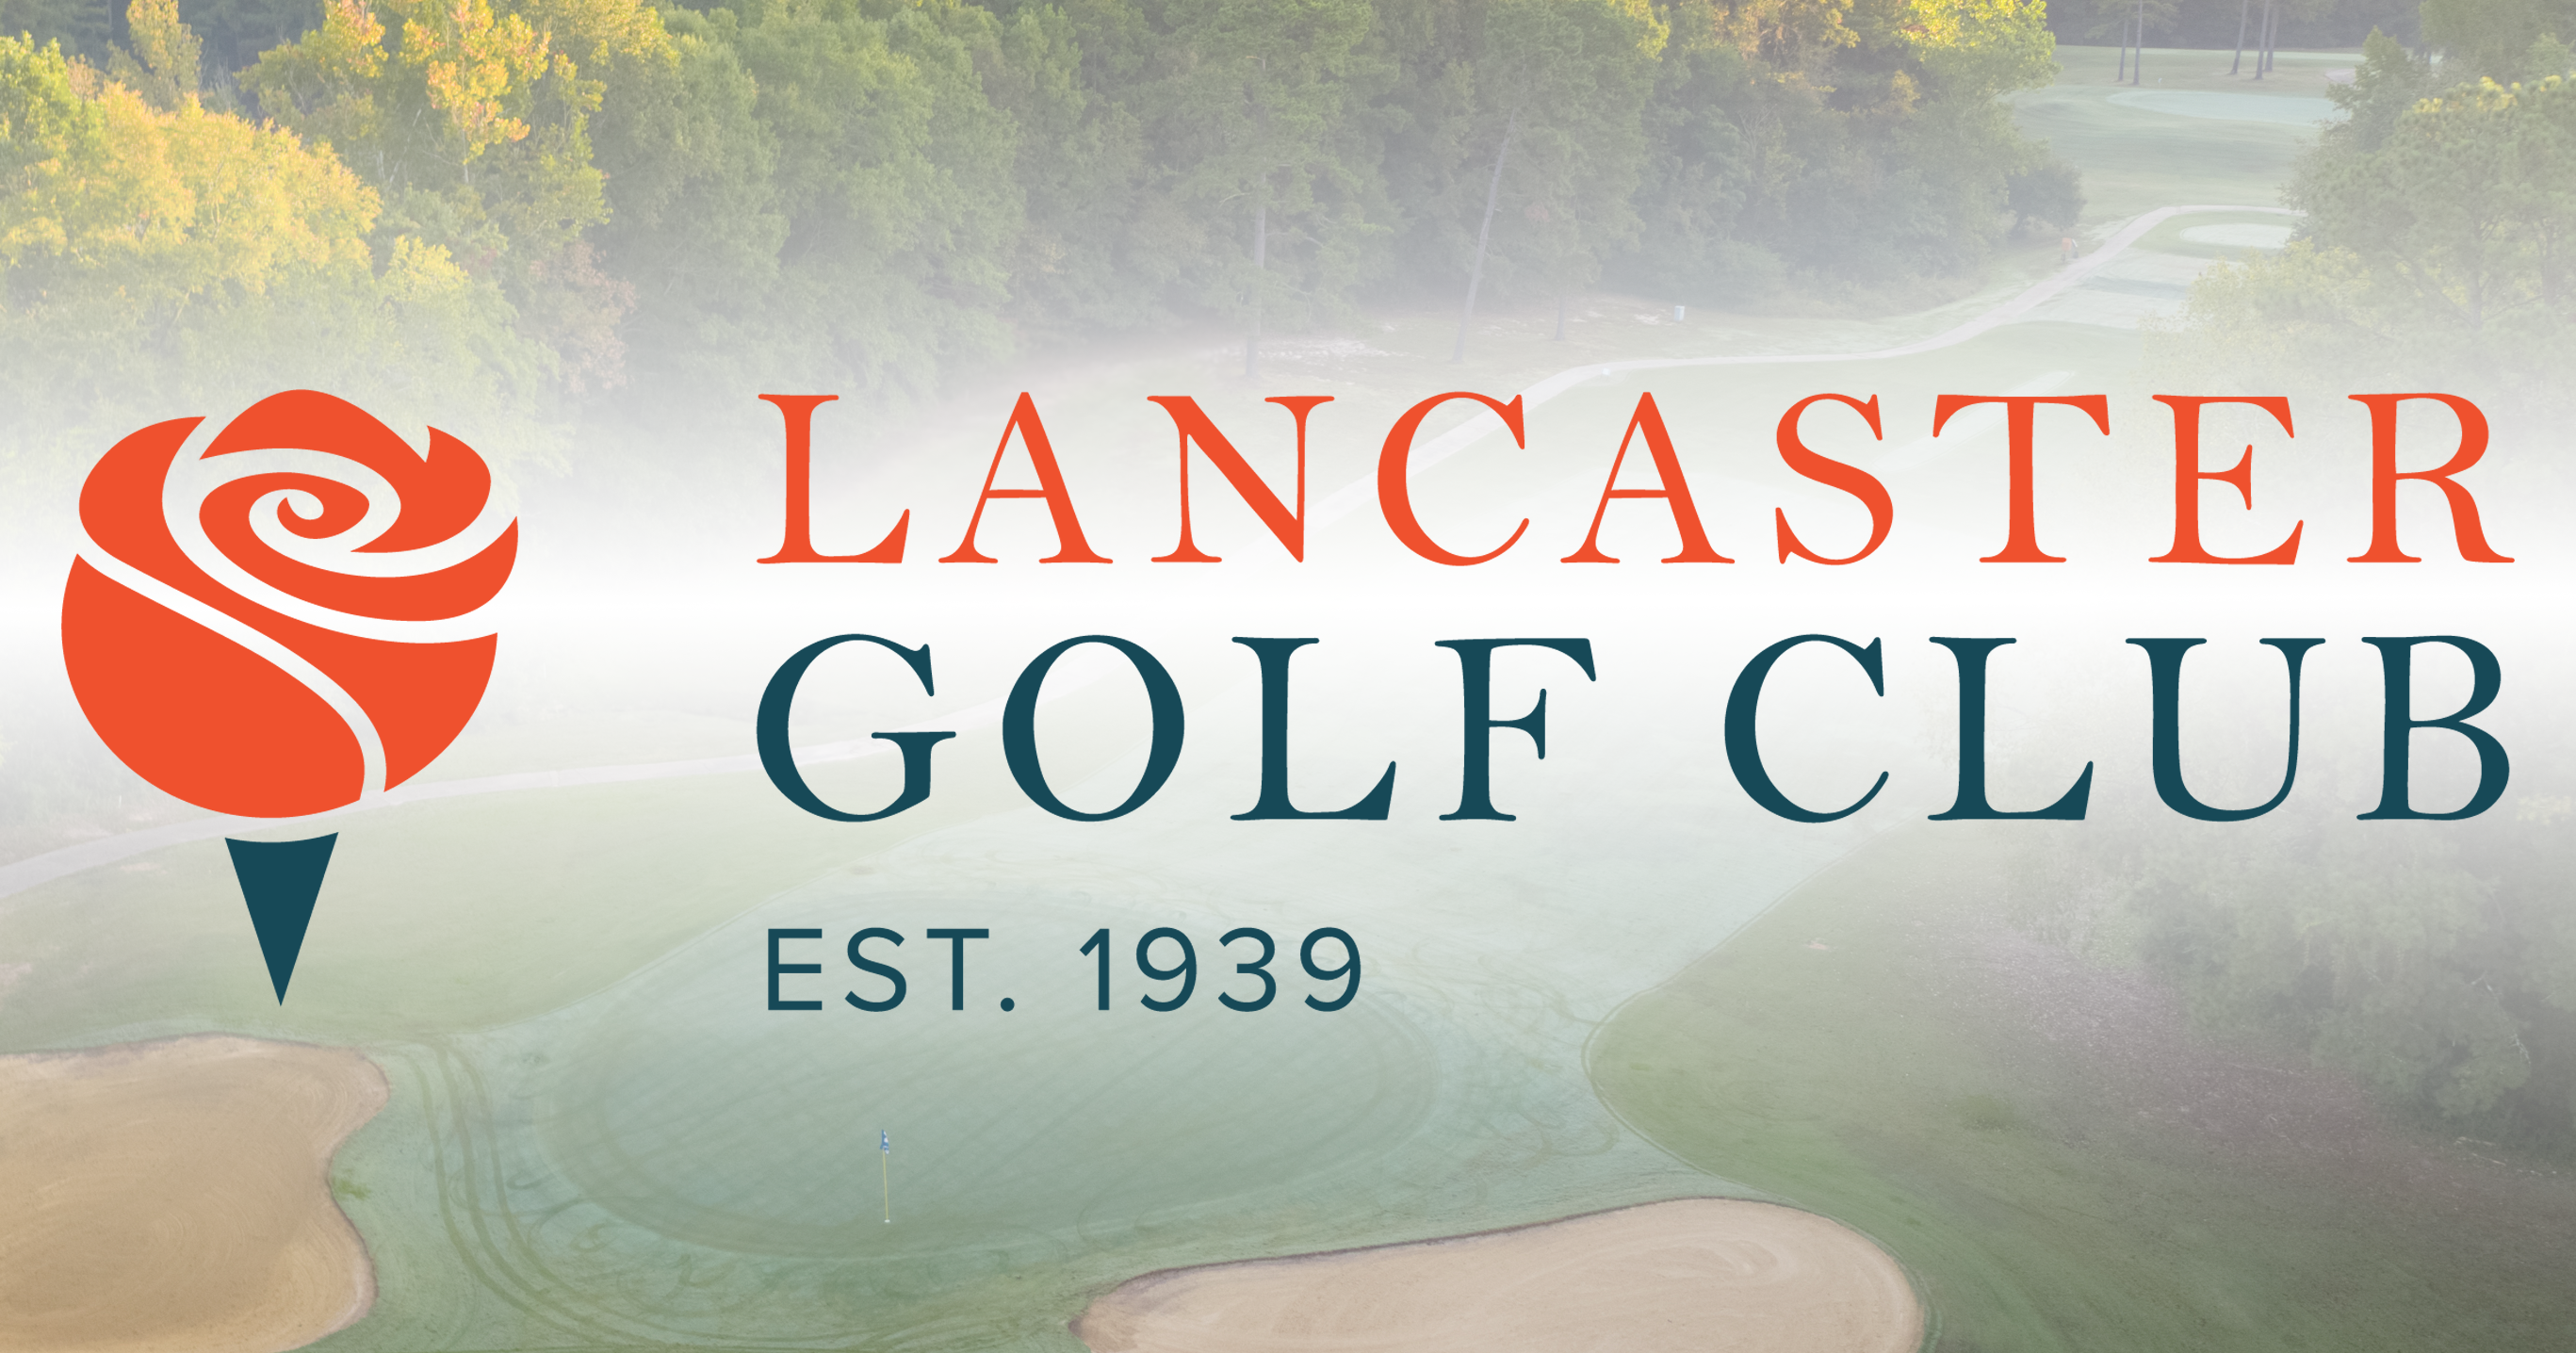 Lancaster Golf Club logo overlay on course photo